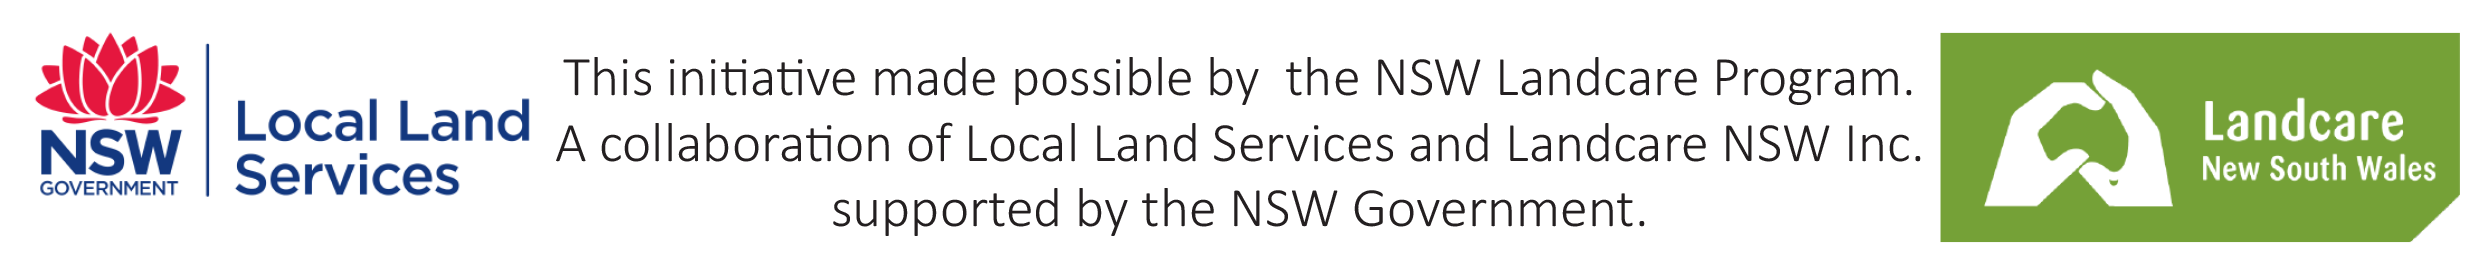 NSW Landcare Program Acknowledgement Stack 3 (1)